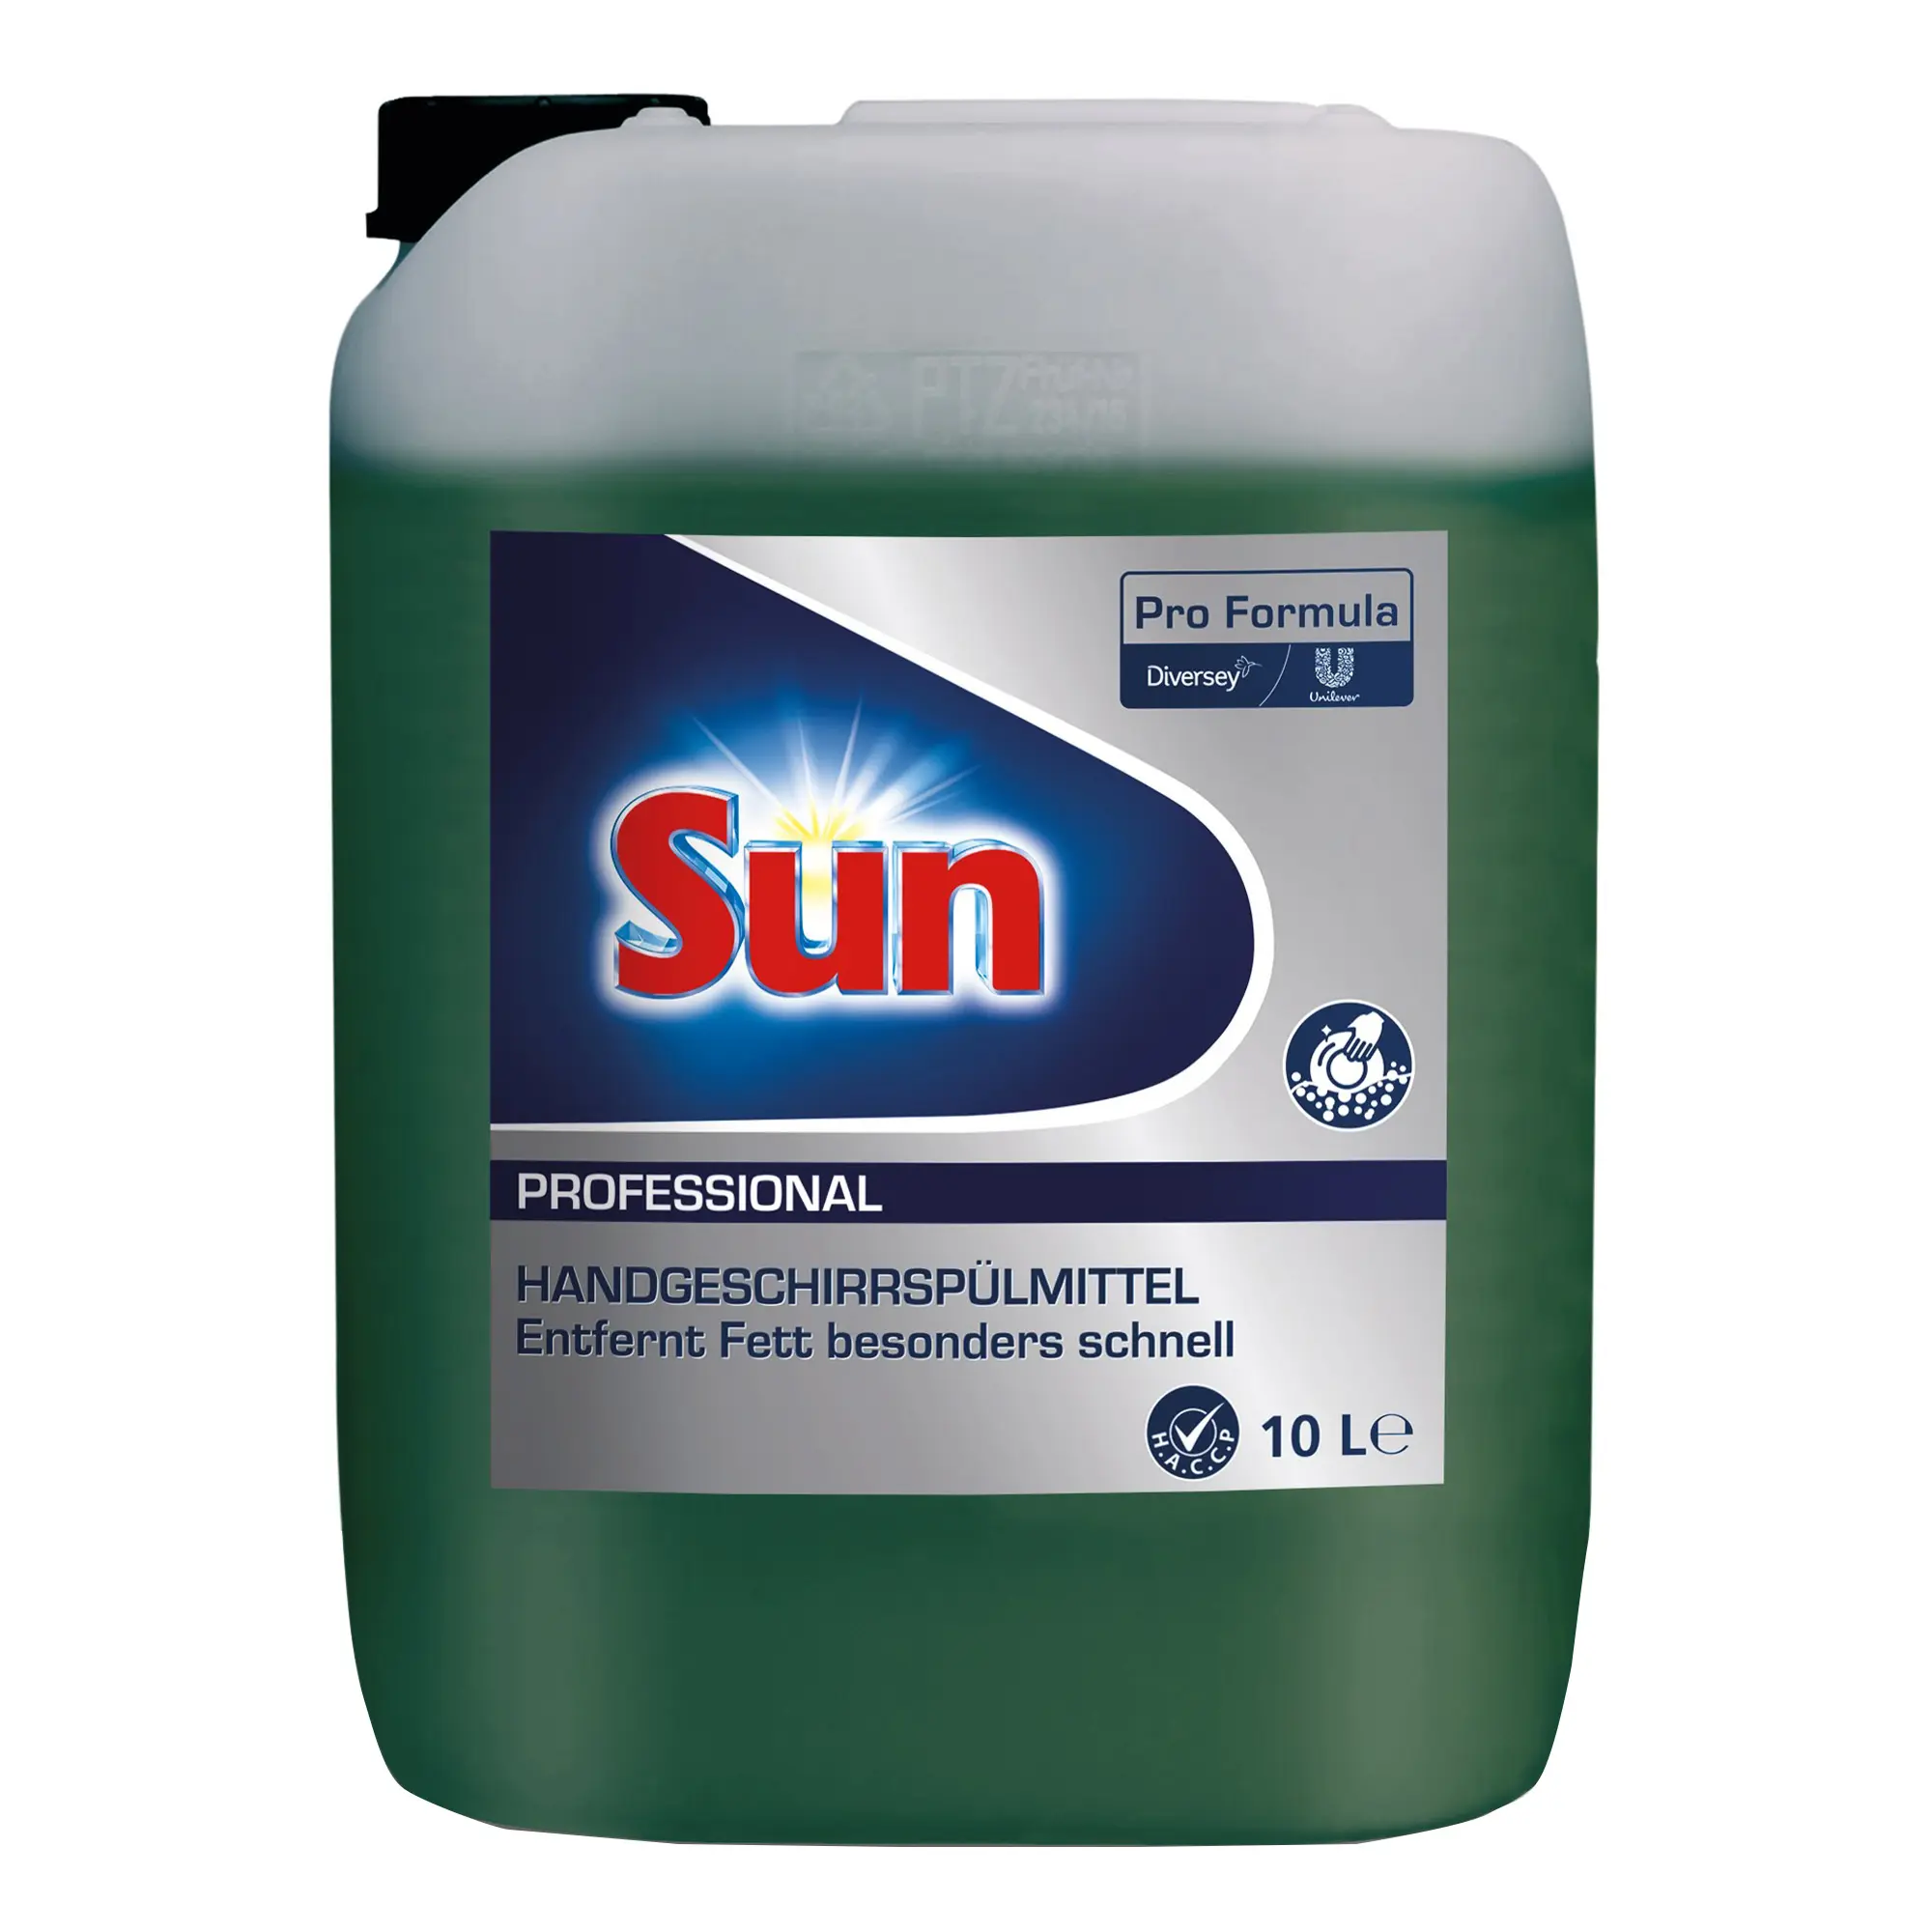 SUN Professional Handgeschirrspülmittel 10 Liter Kanister 101100702_1